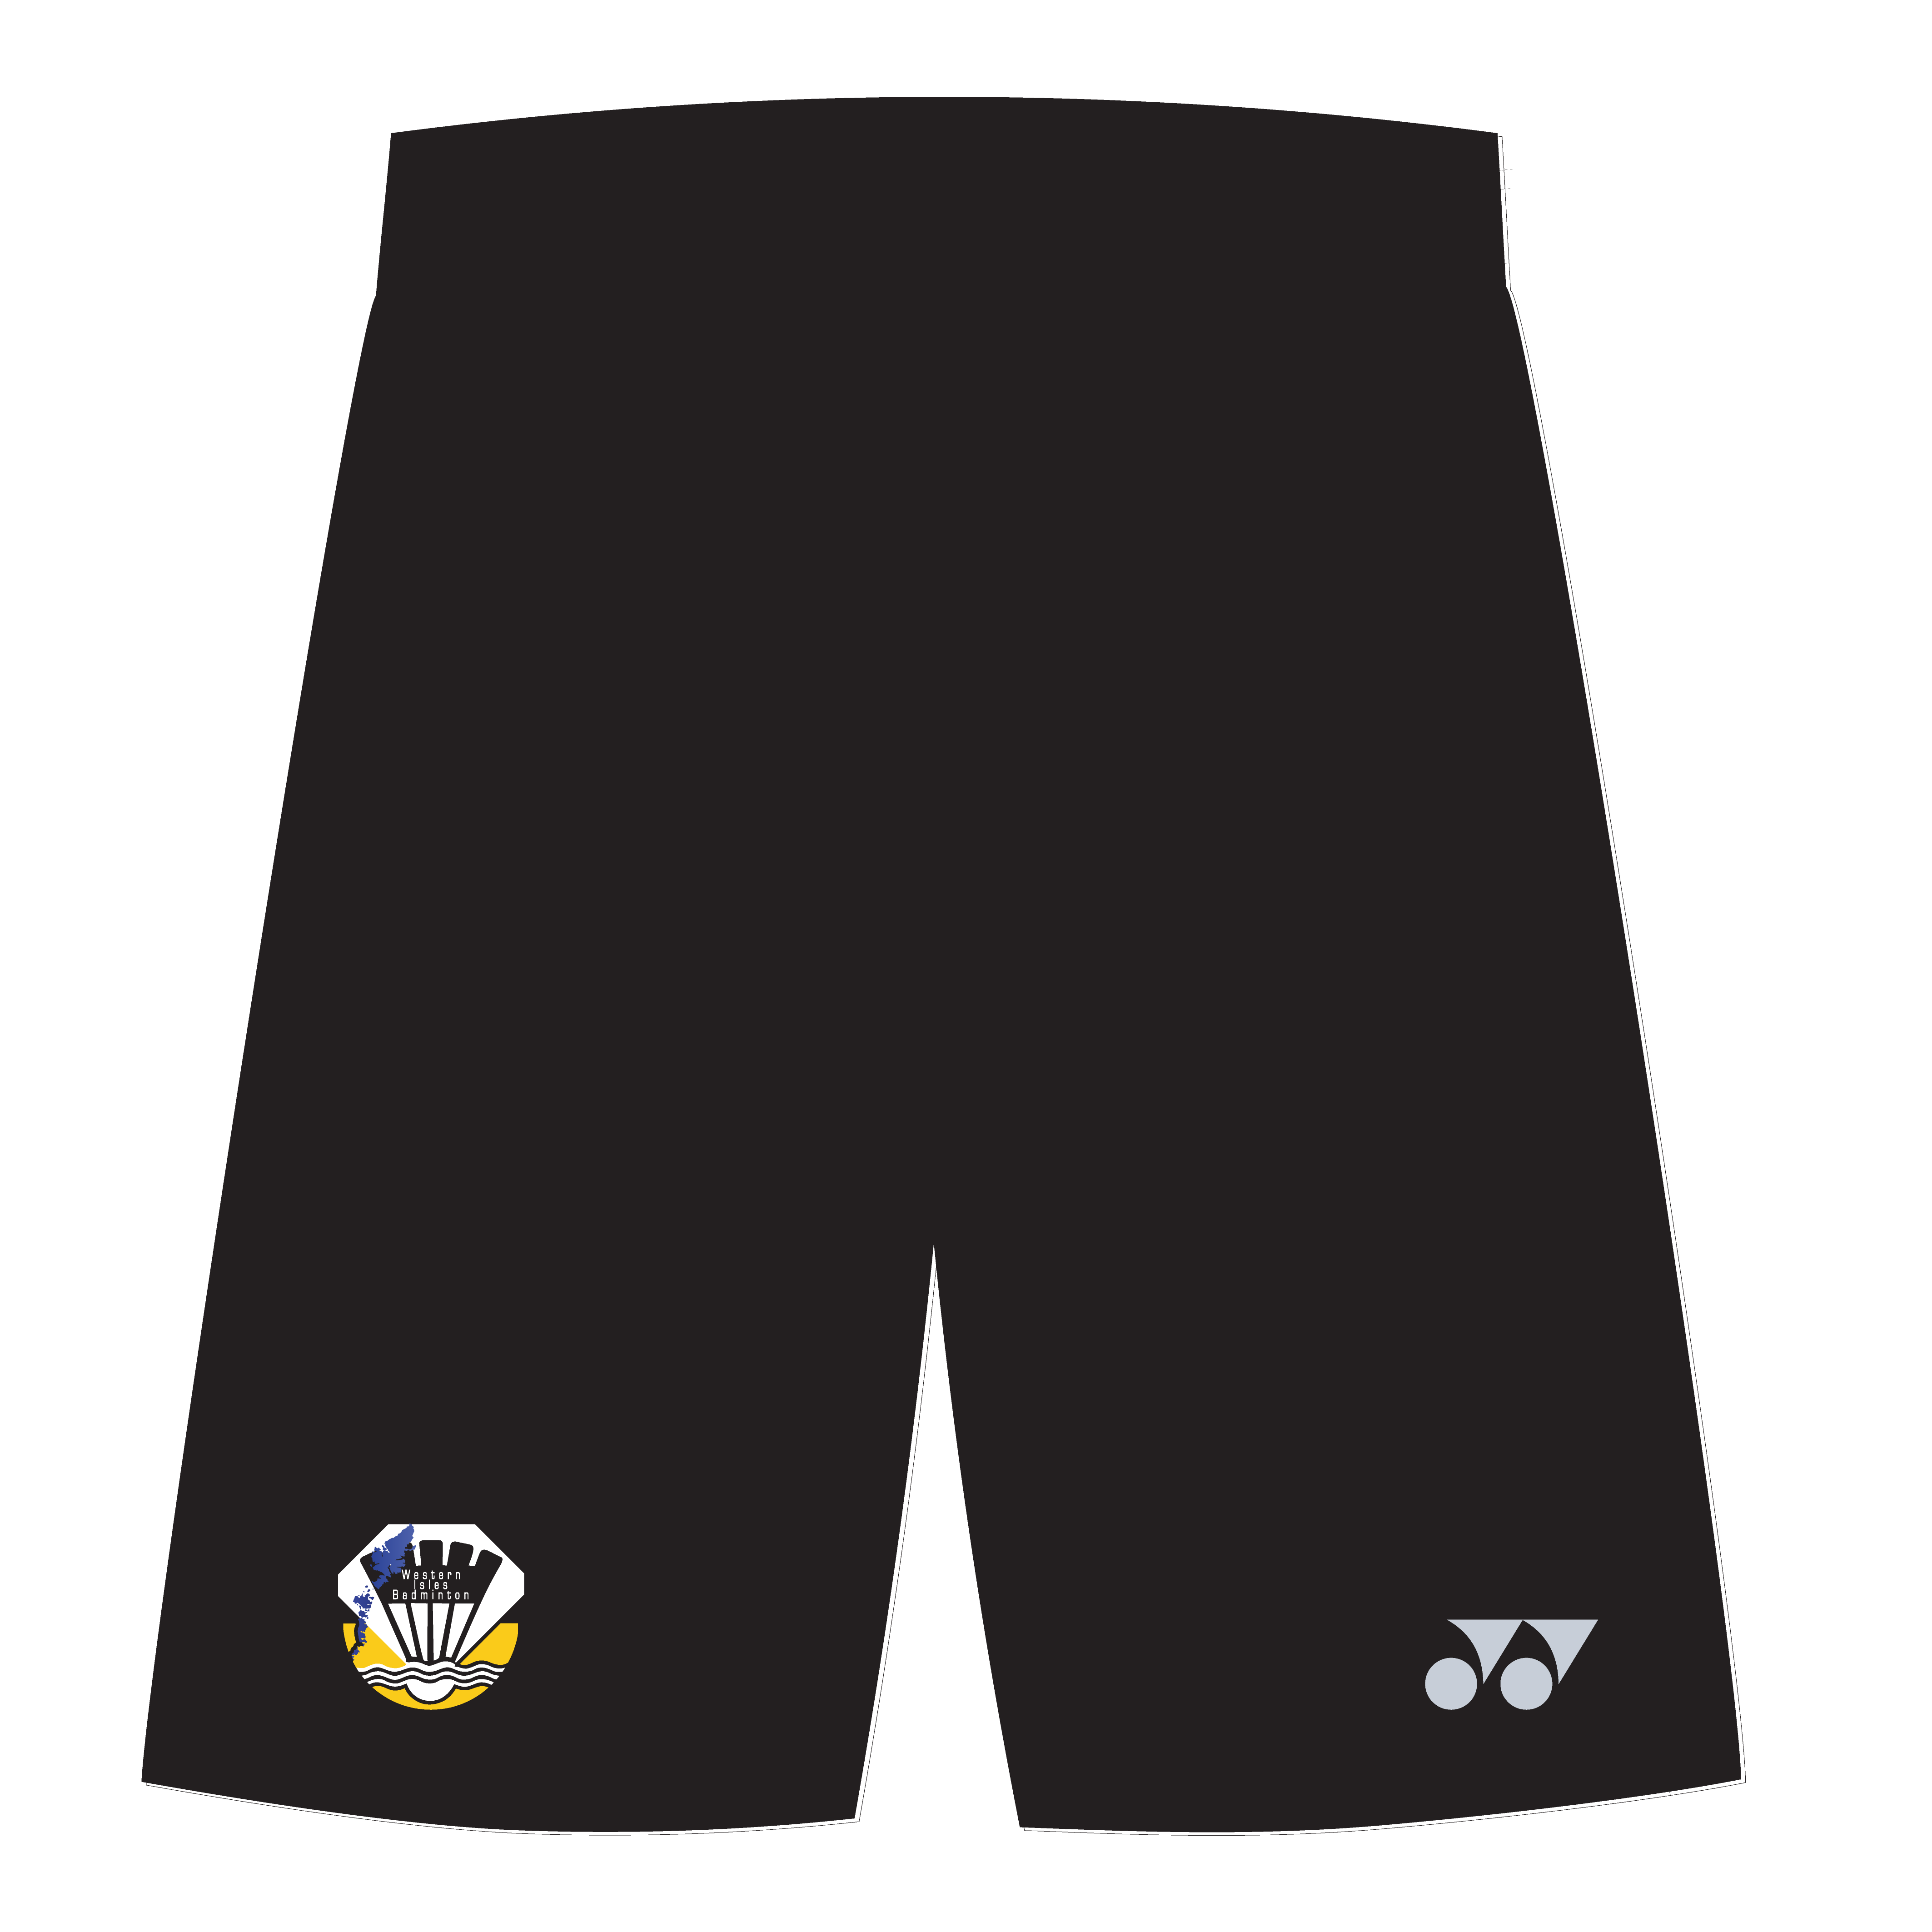 Western Isles YS2000 Unisex Shorts